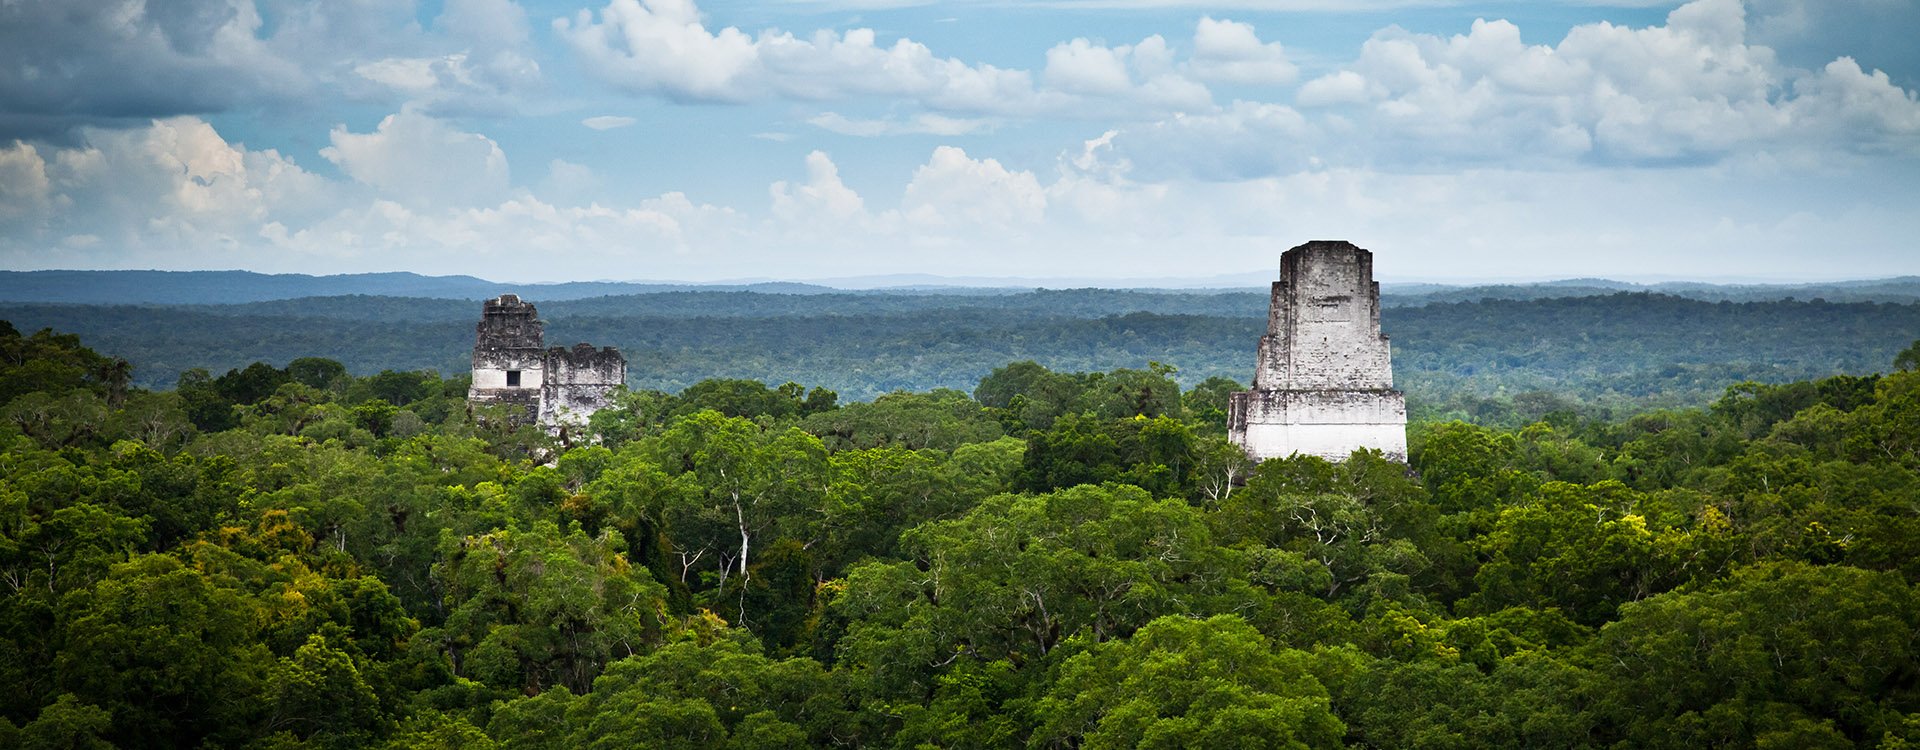 Tikal, Mayan ruins in Guatemala, seen from temple IV